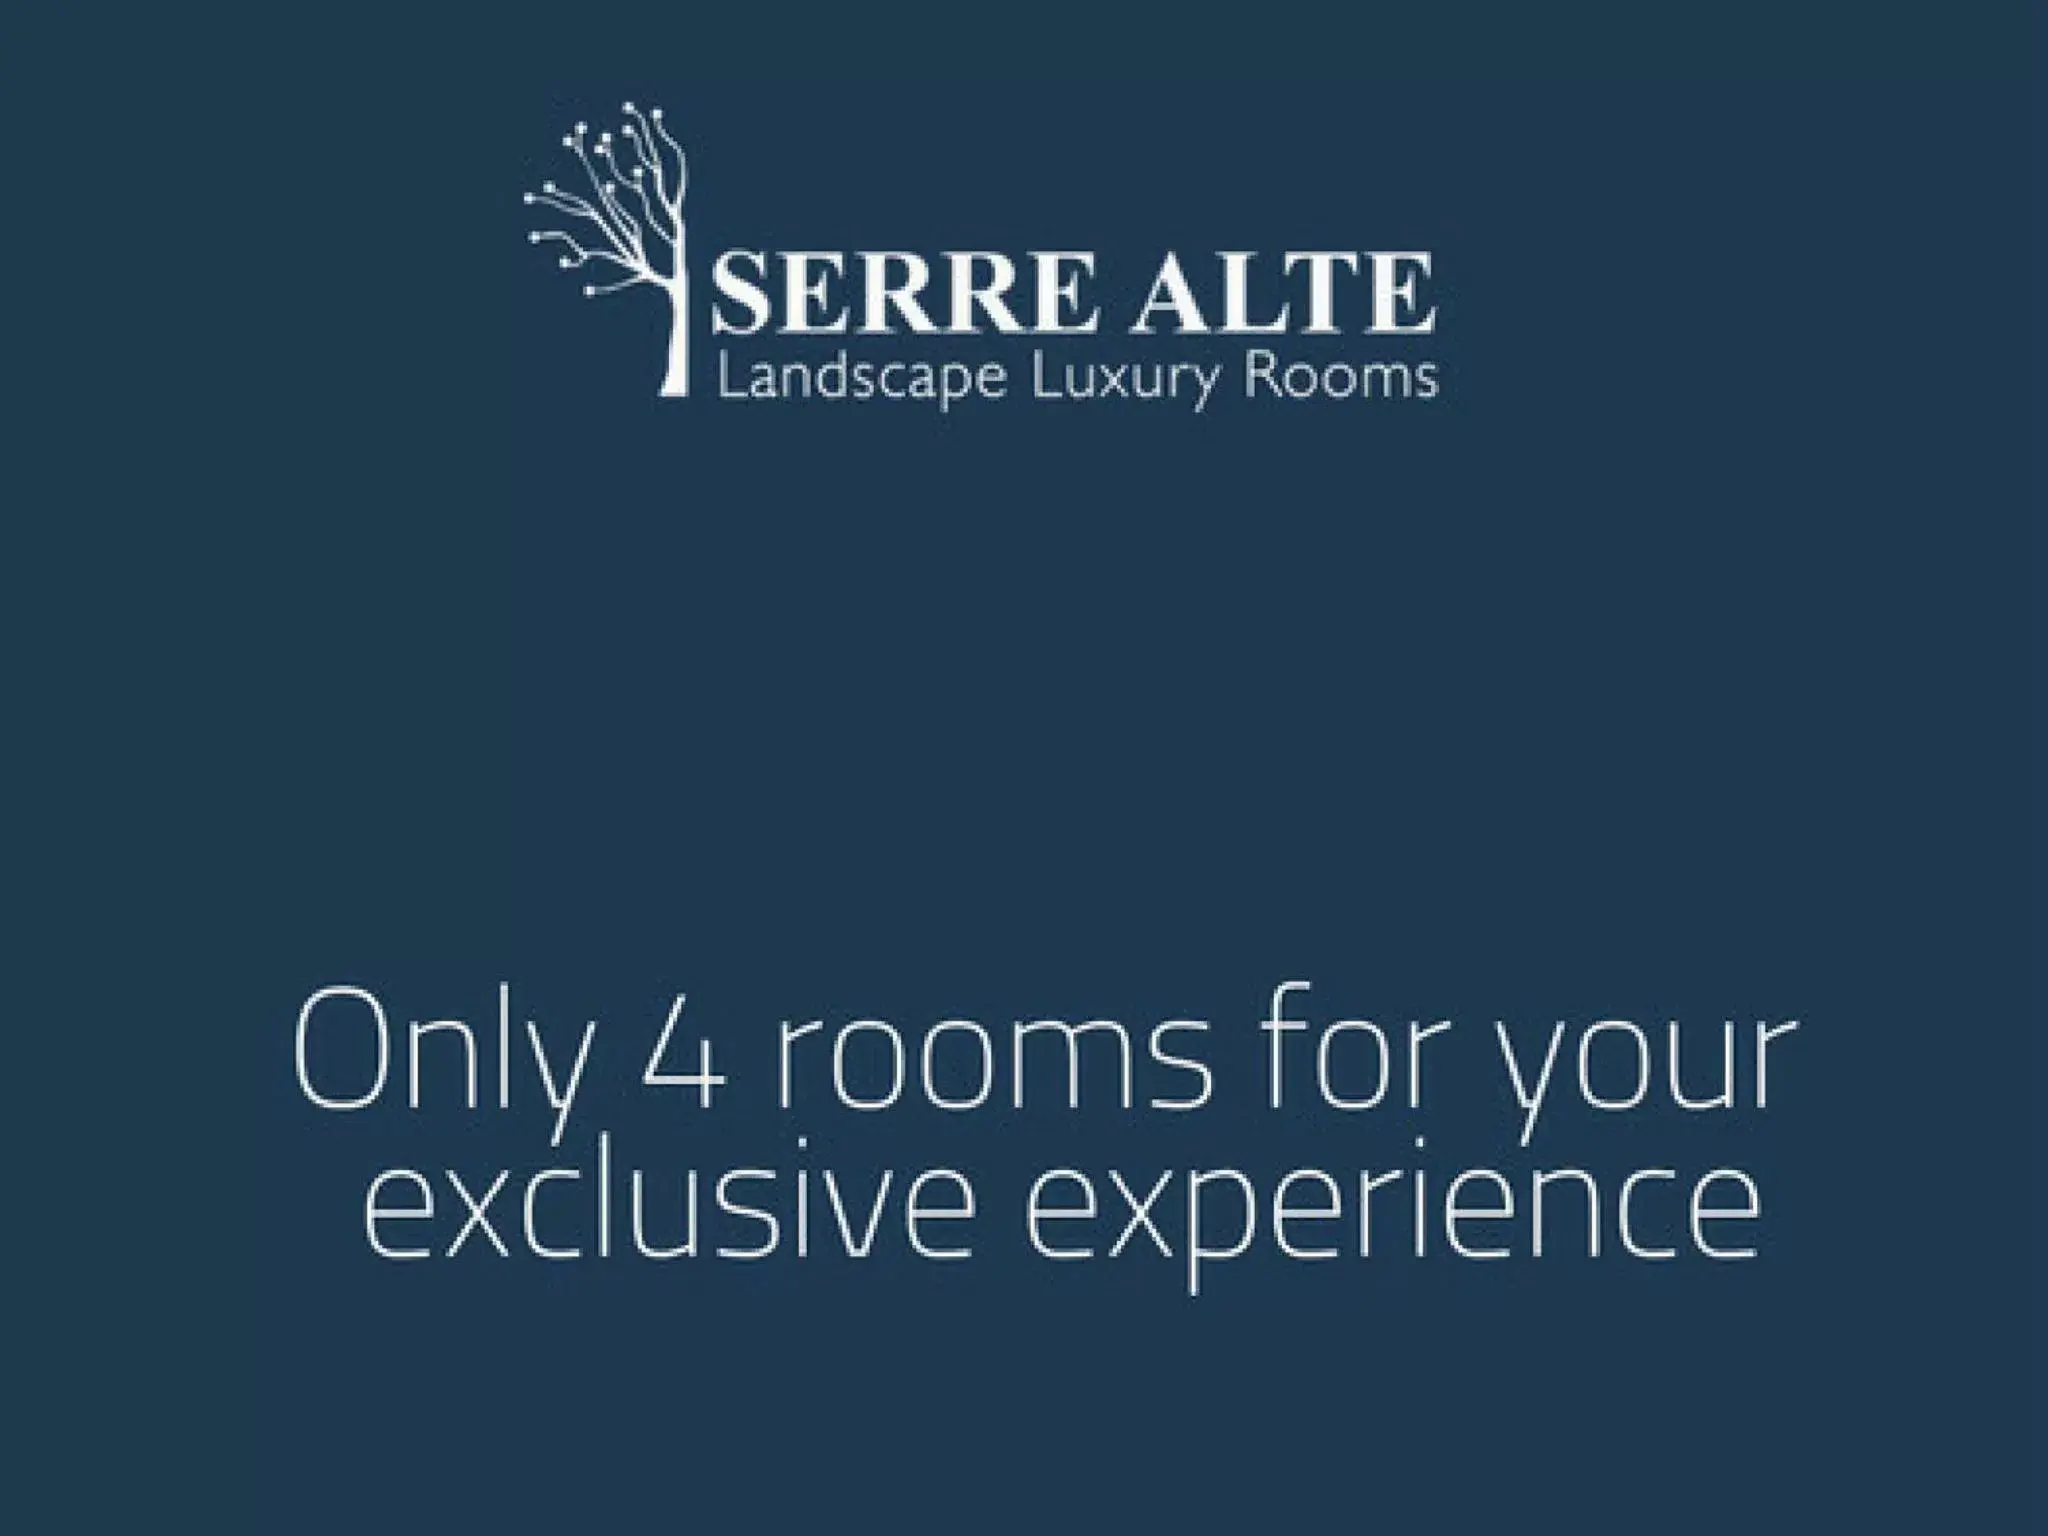 Logo/Certificate/Sign, Property Logo/Sign in Serre Alte Landscape Luxury Rooms